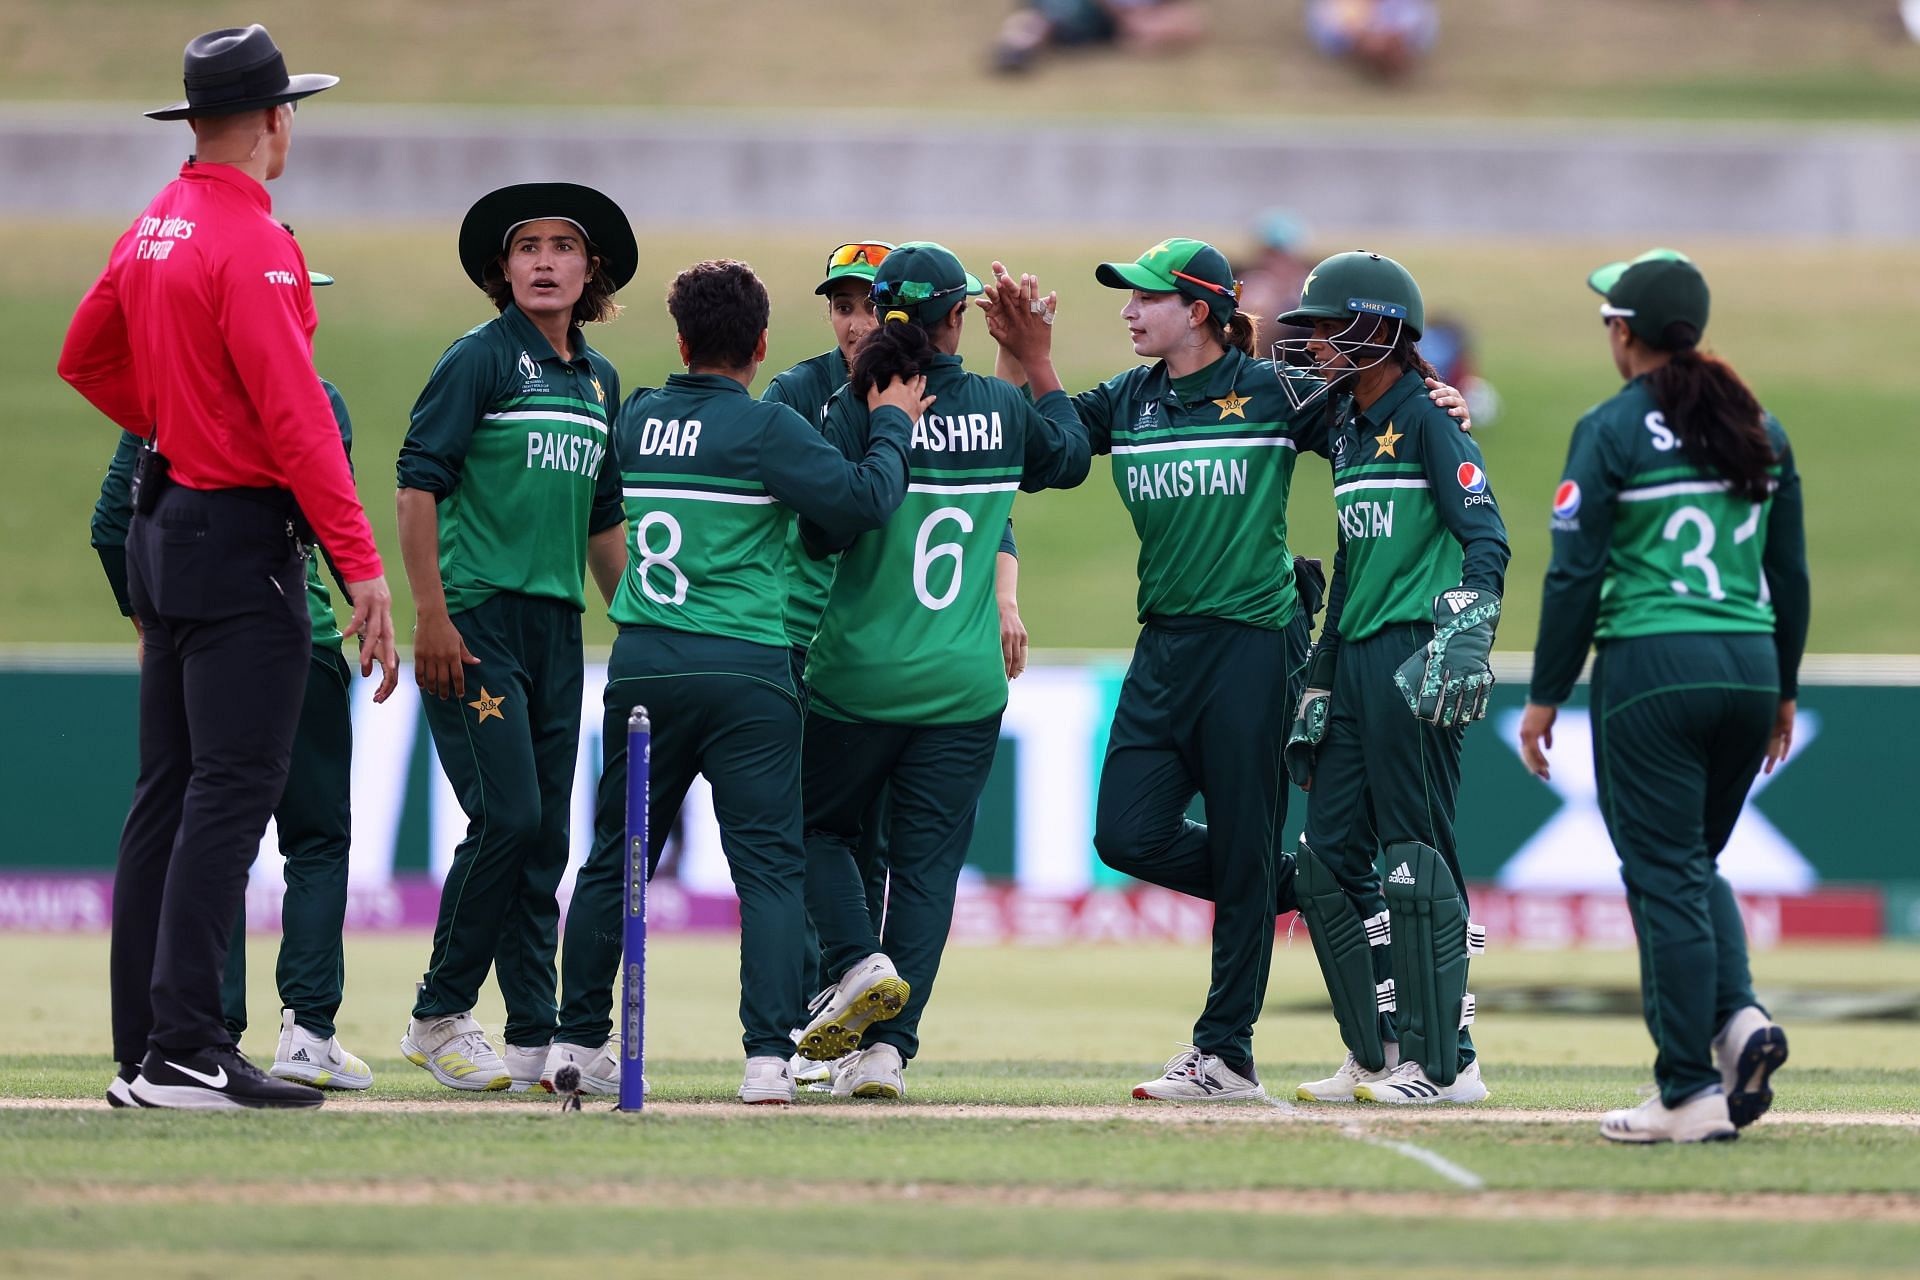 ICC Women's World Cup 2022, Match 24 England Women vs Pakistan Women